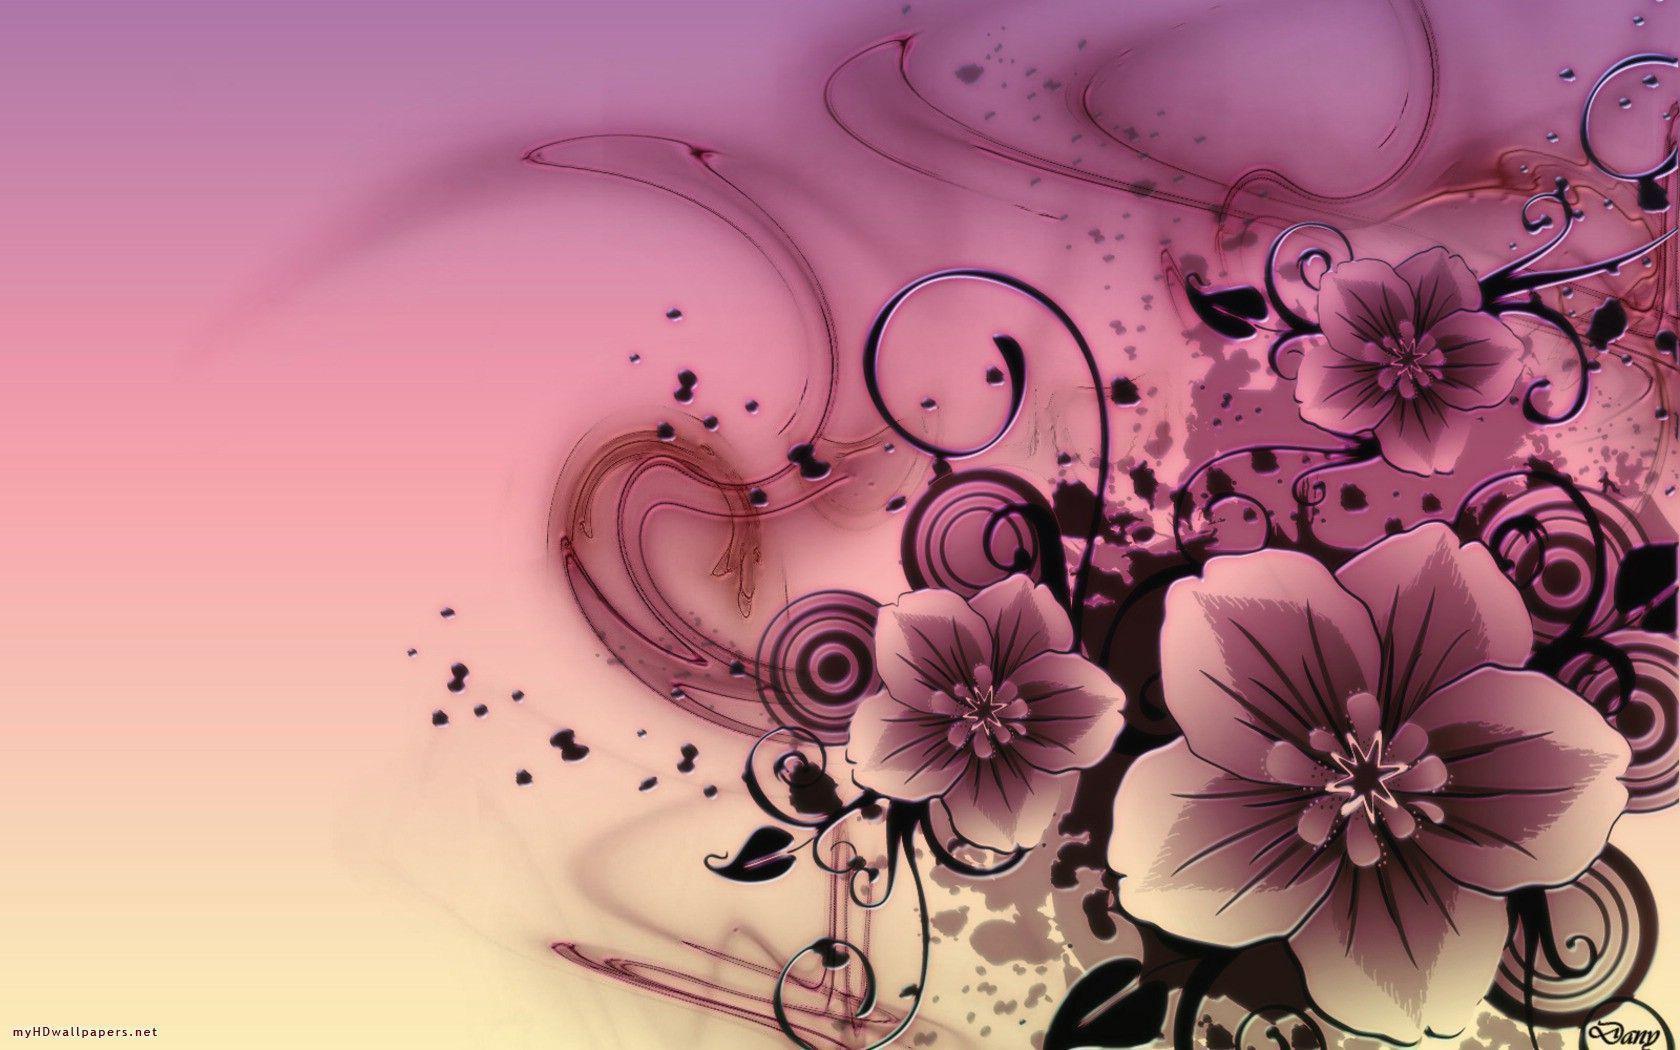 Pink HD Wallpaper 26405 Wallpaper HD. colourinwallpaper